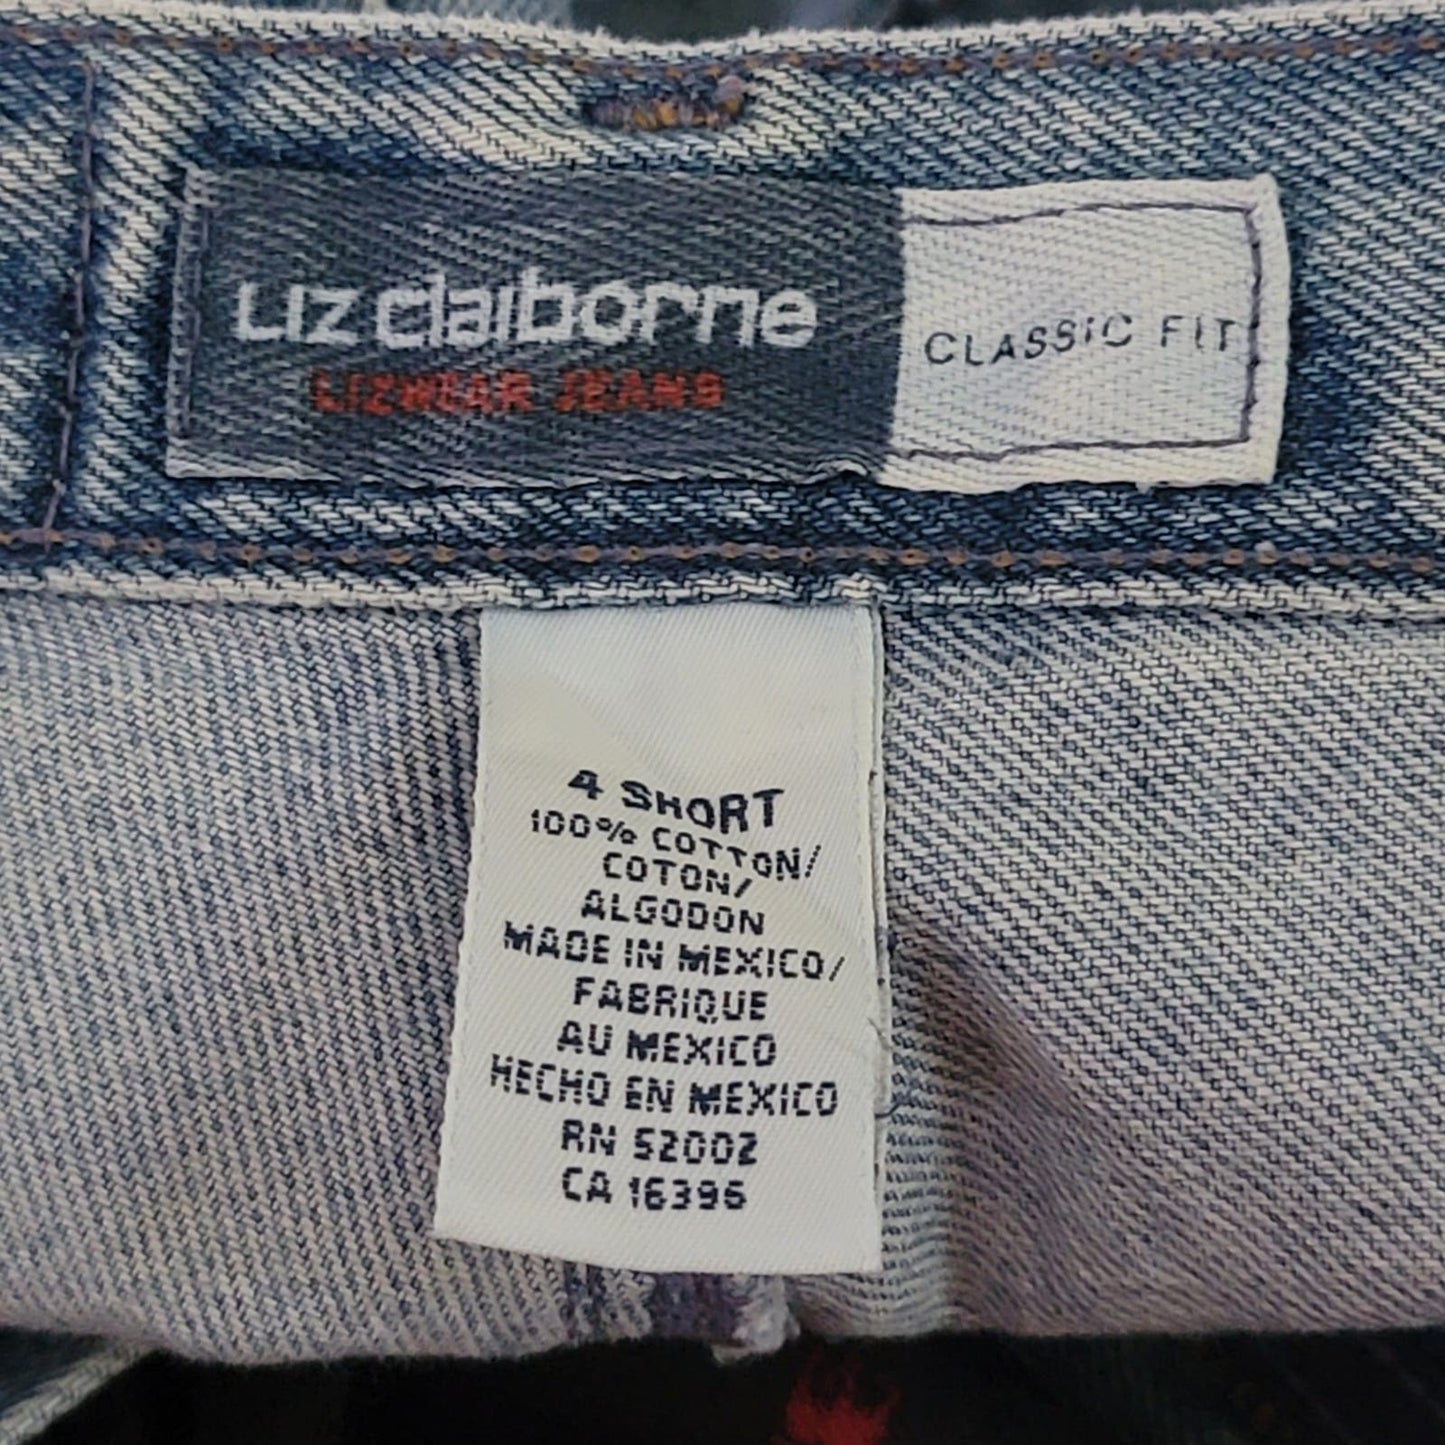 Vintage 90s Liz Claiborne Mom Jeans - 4